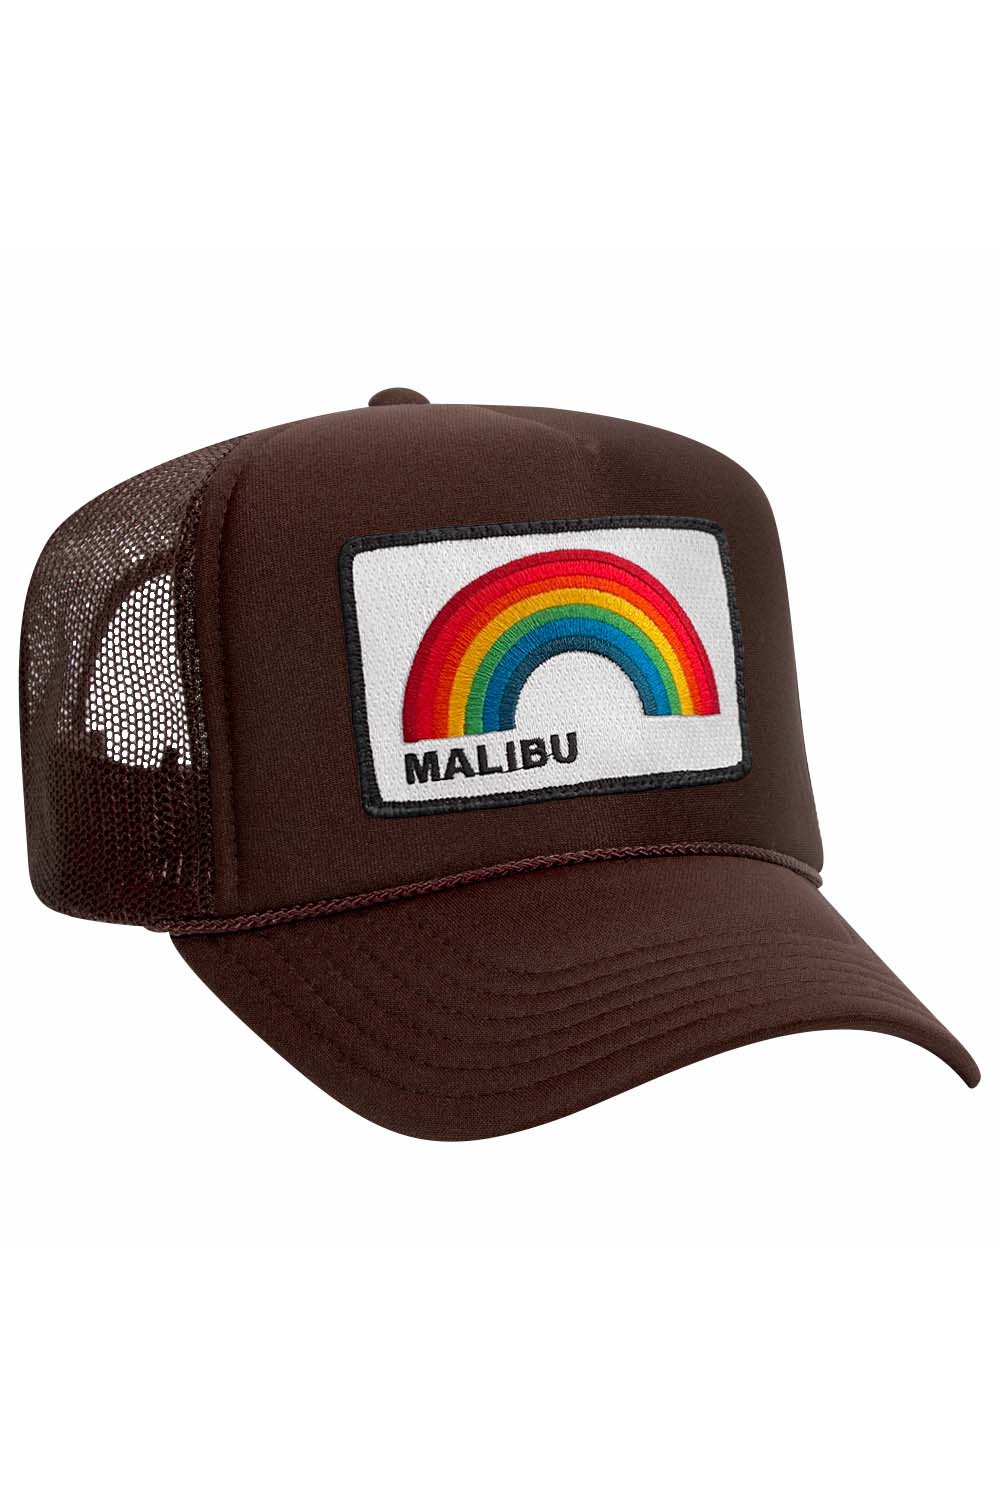 MALIBU RAINBOW TRUCKER HAT HATS Aviator Nation OS BROWN 